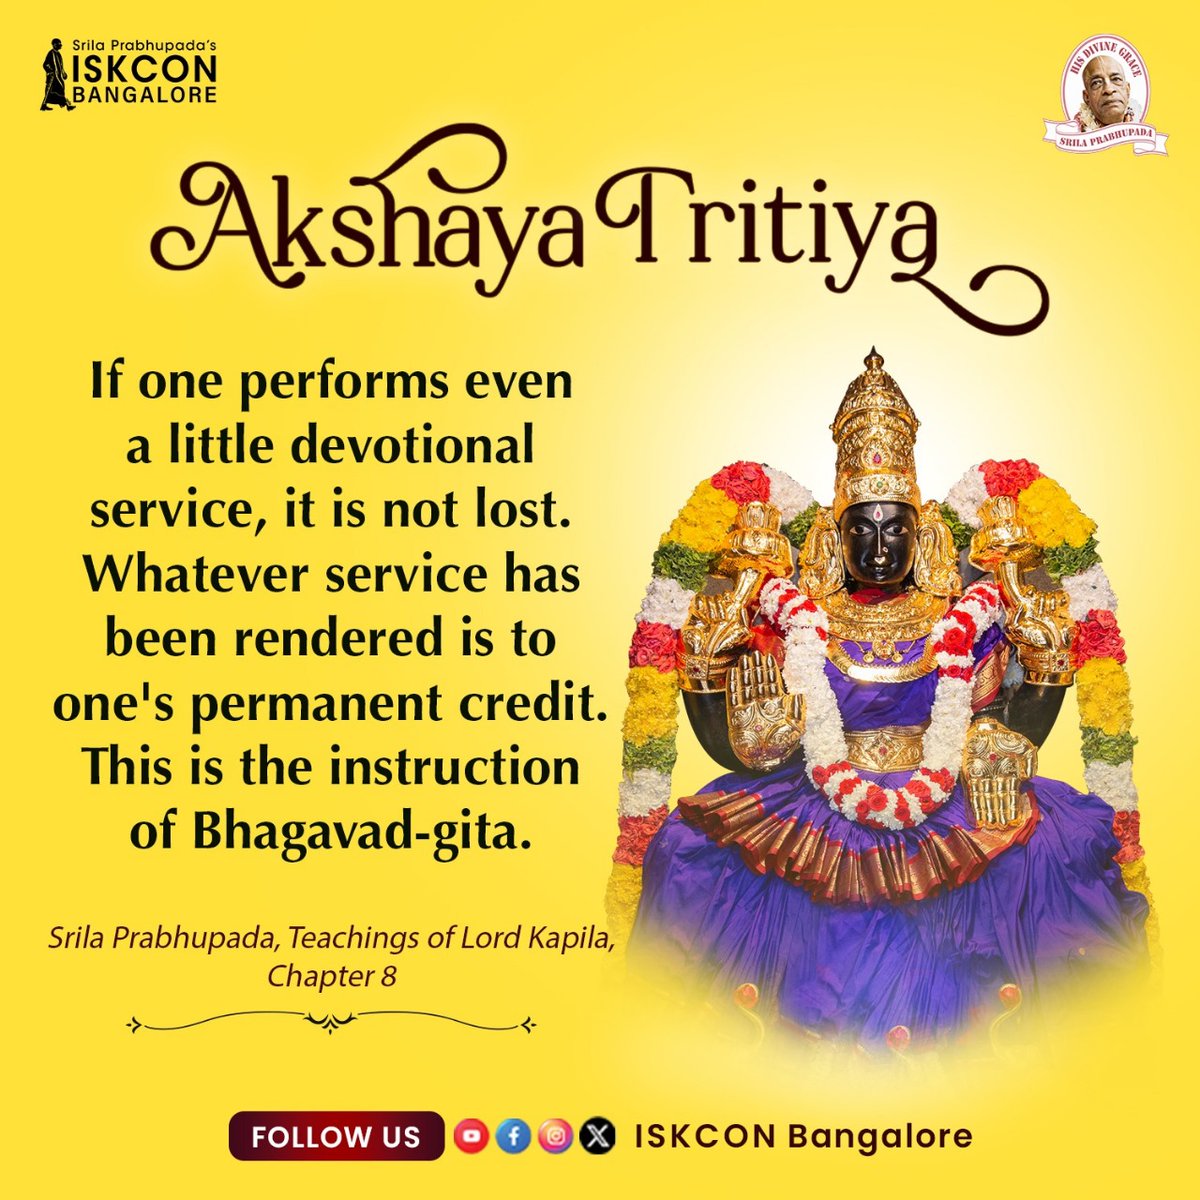 Reap eternal rewards by performing devotional service on the auspicious occasion of Akshaya Tritiya. Hare Krishna! #akshayatritiya #lakshmi #gold #iskconbangalore #harekrishna #iskcon